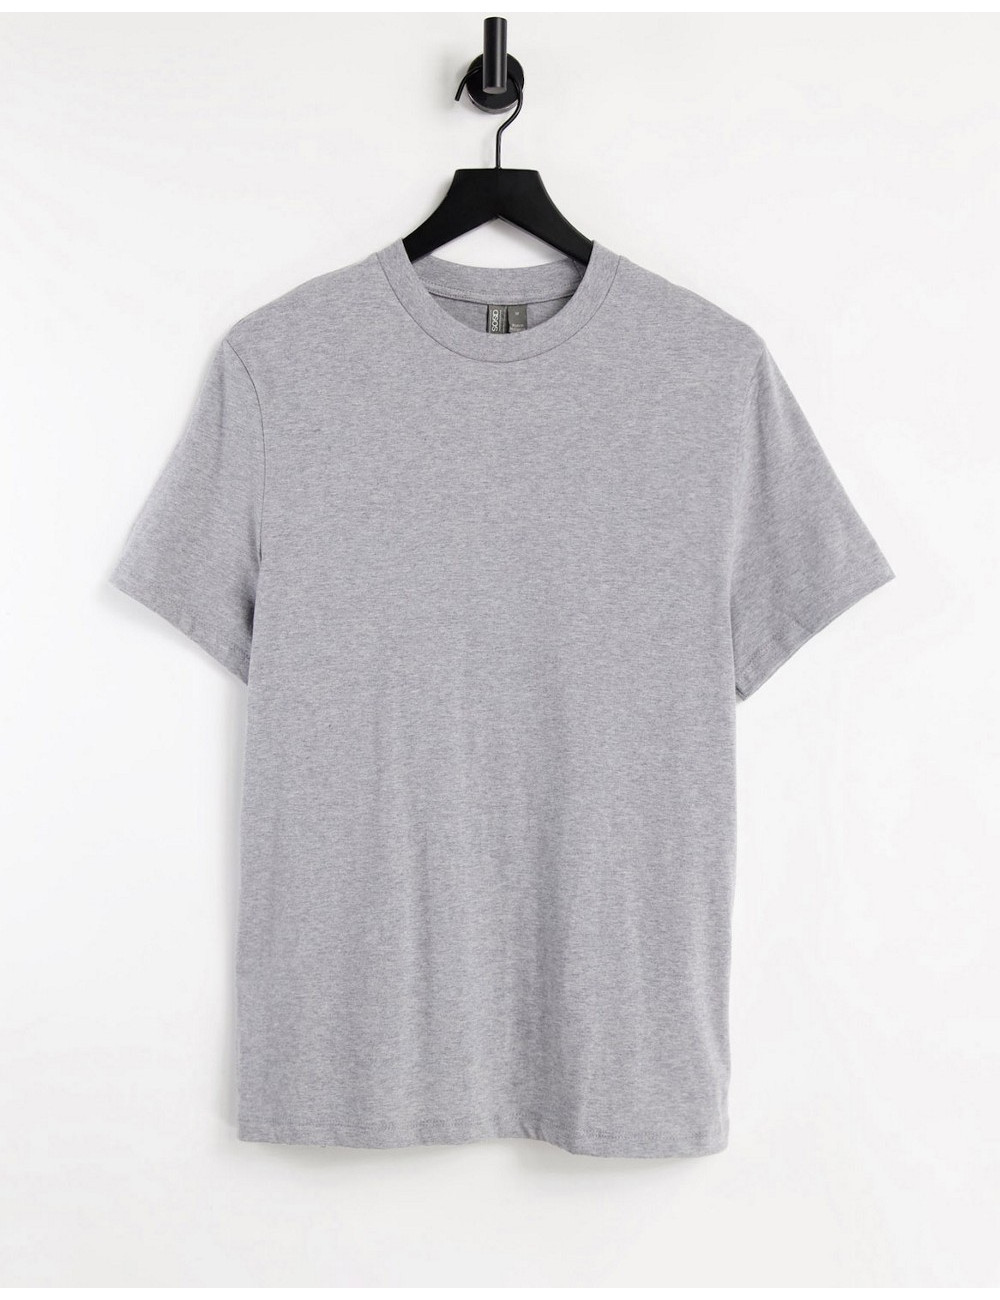 ASOS DESIGN t-shirt in grey...